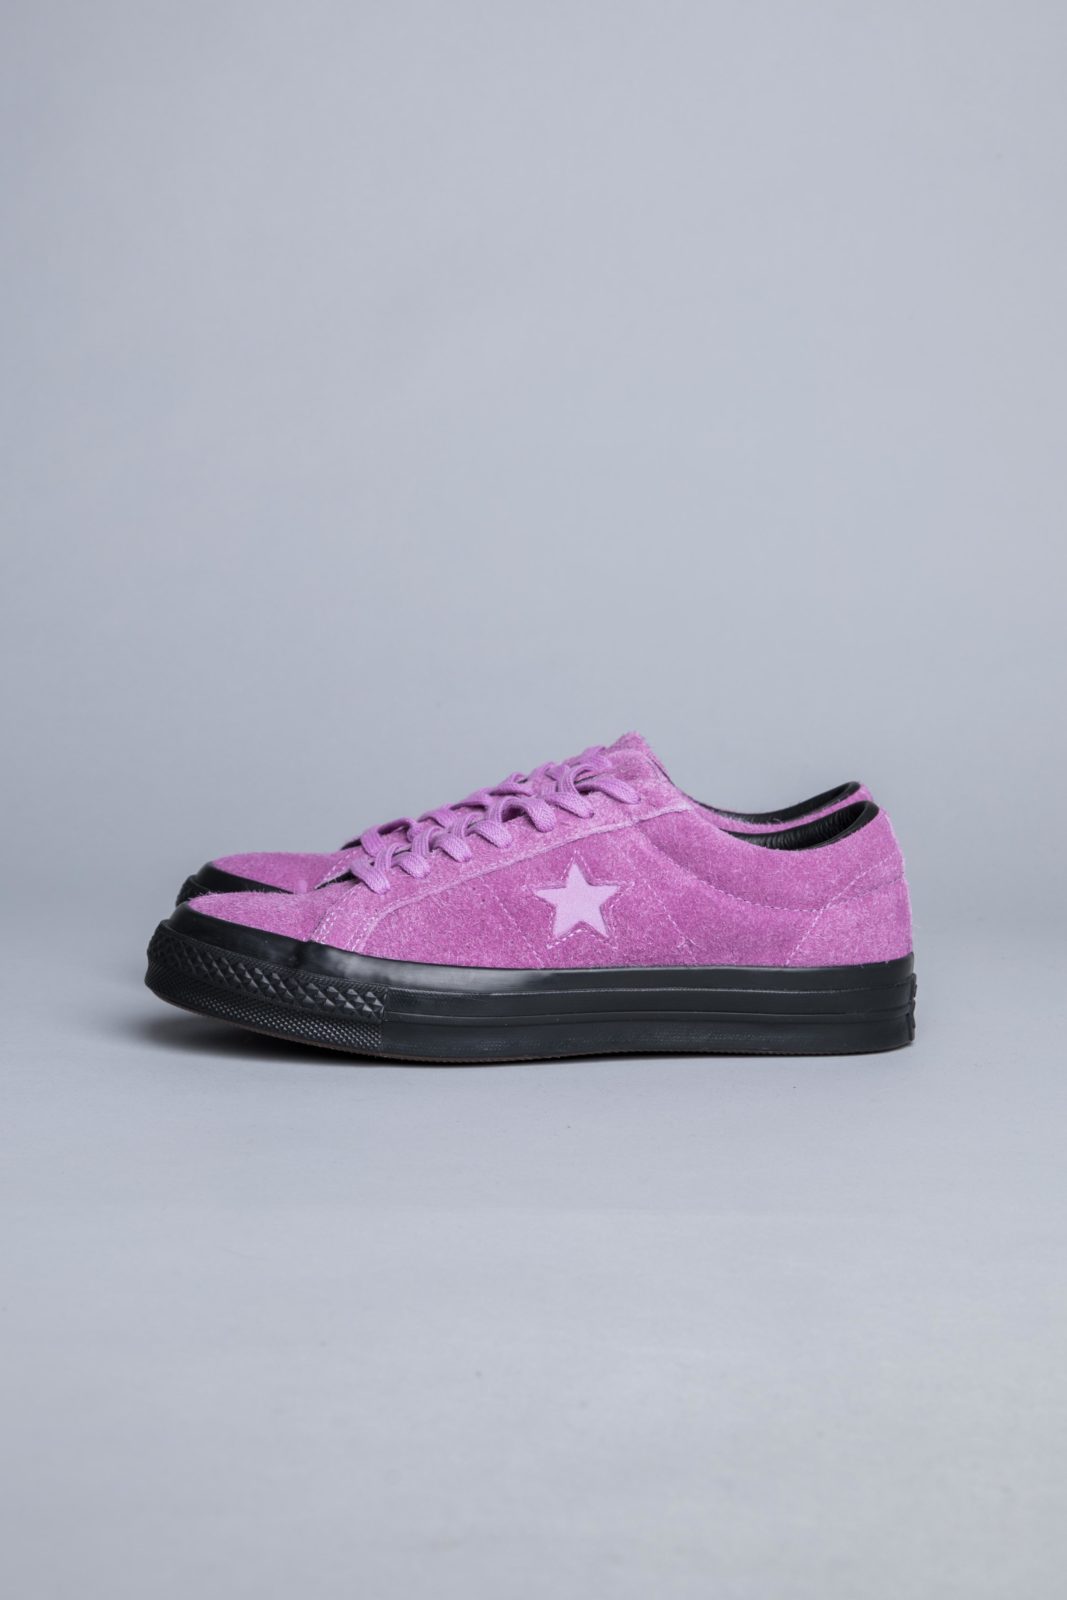 Converse One Star Fuchsia Glow Sneakers 